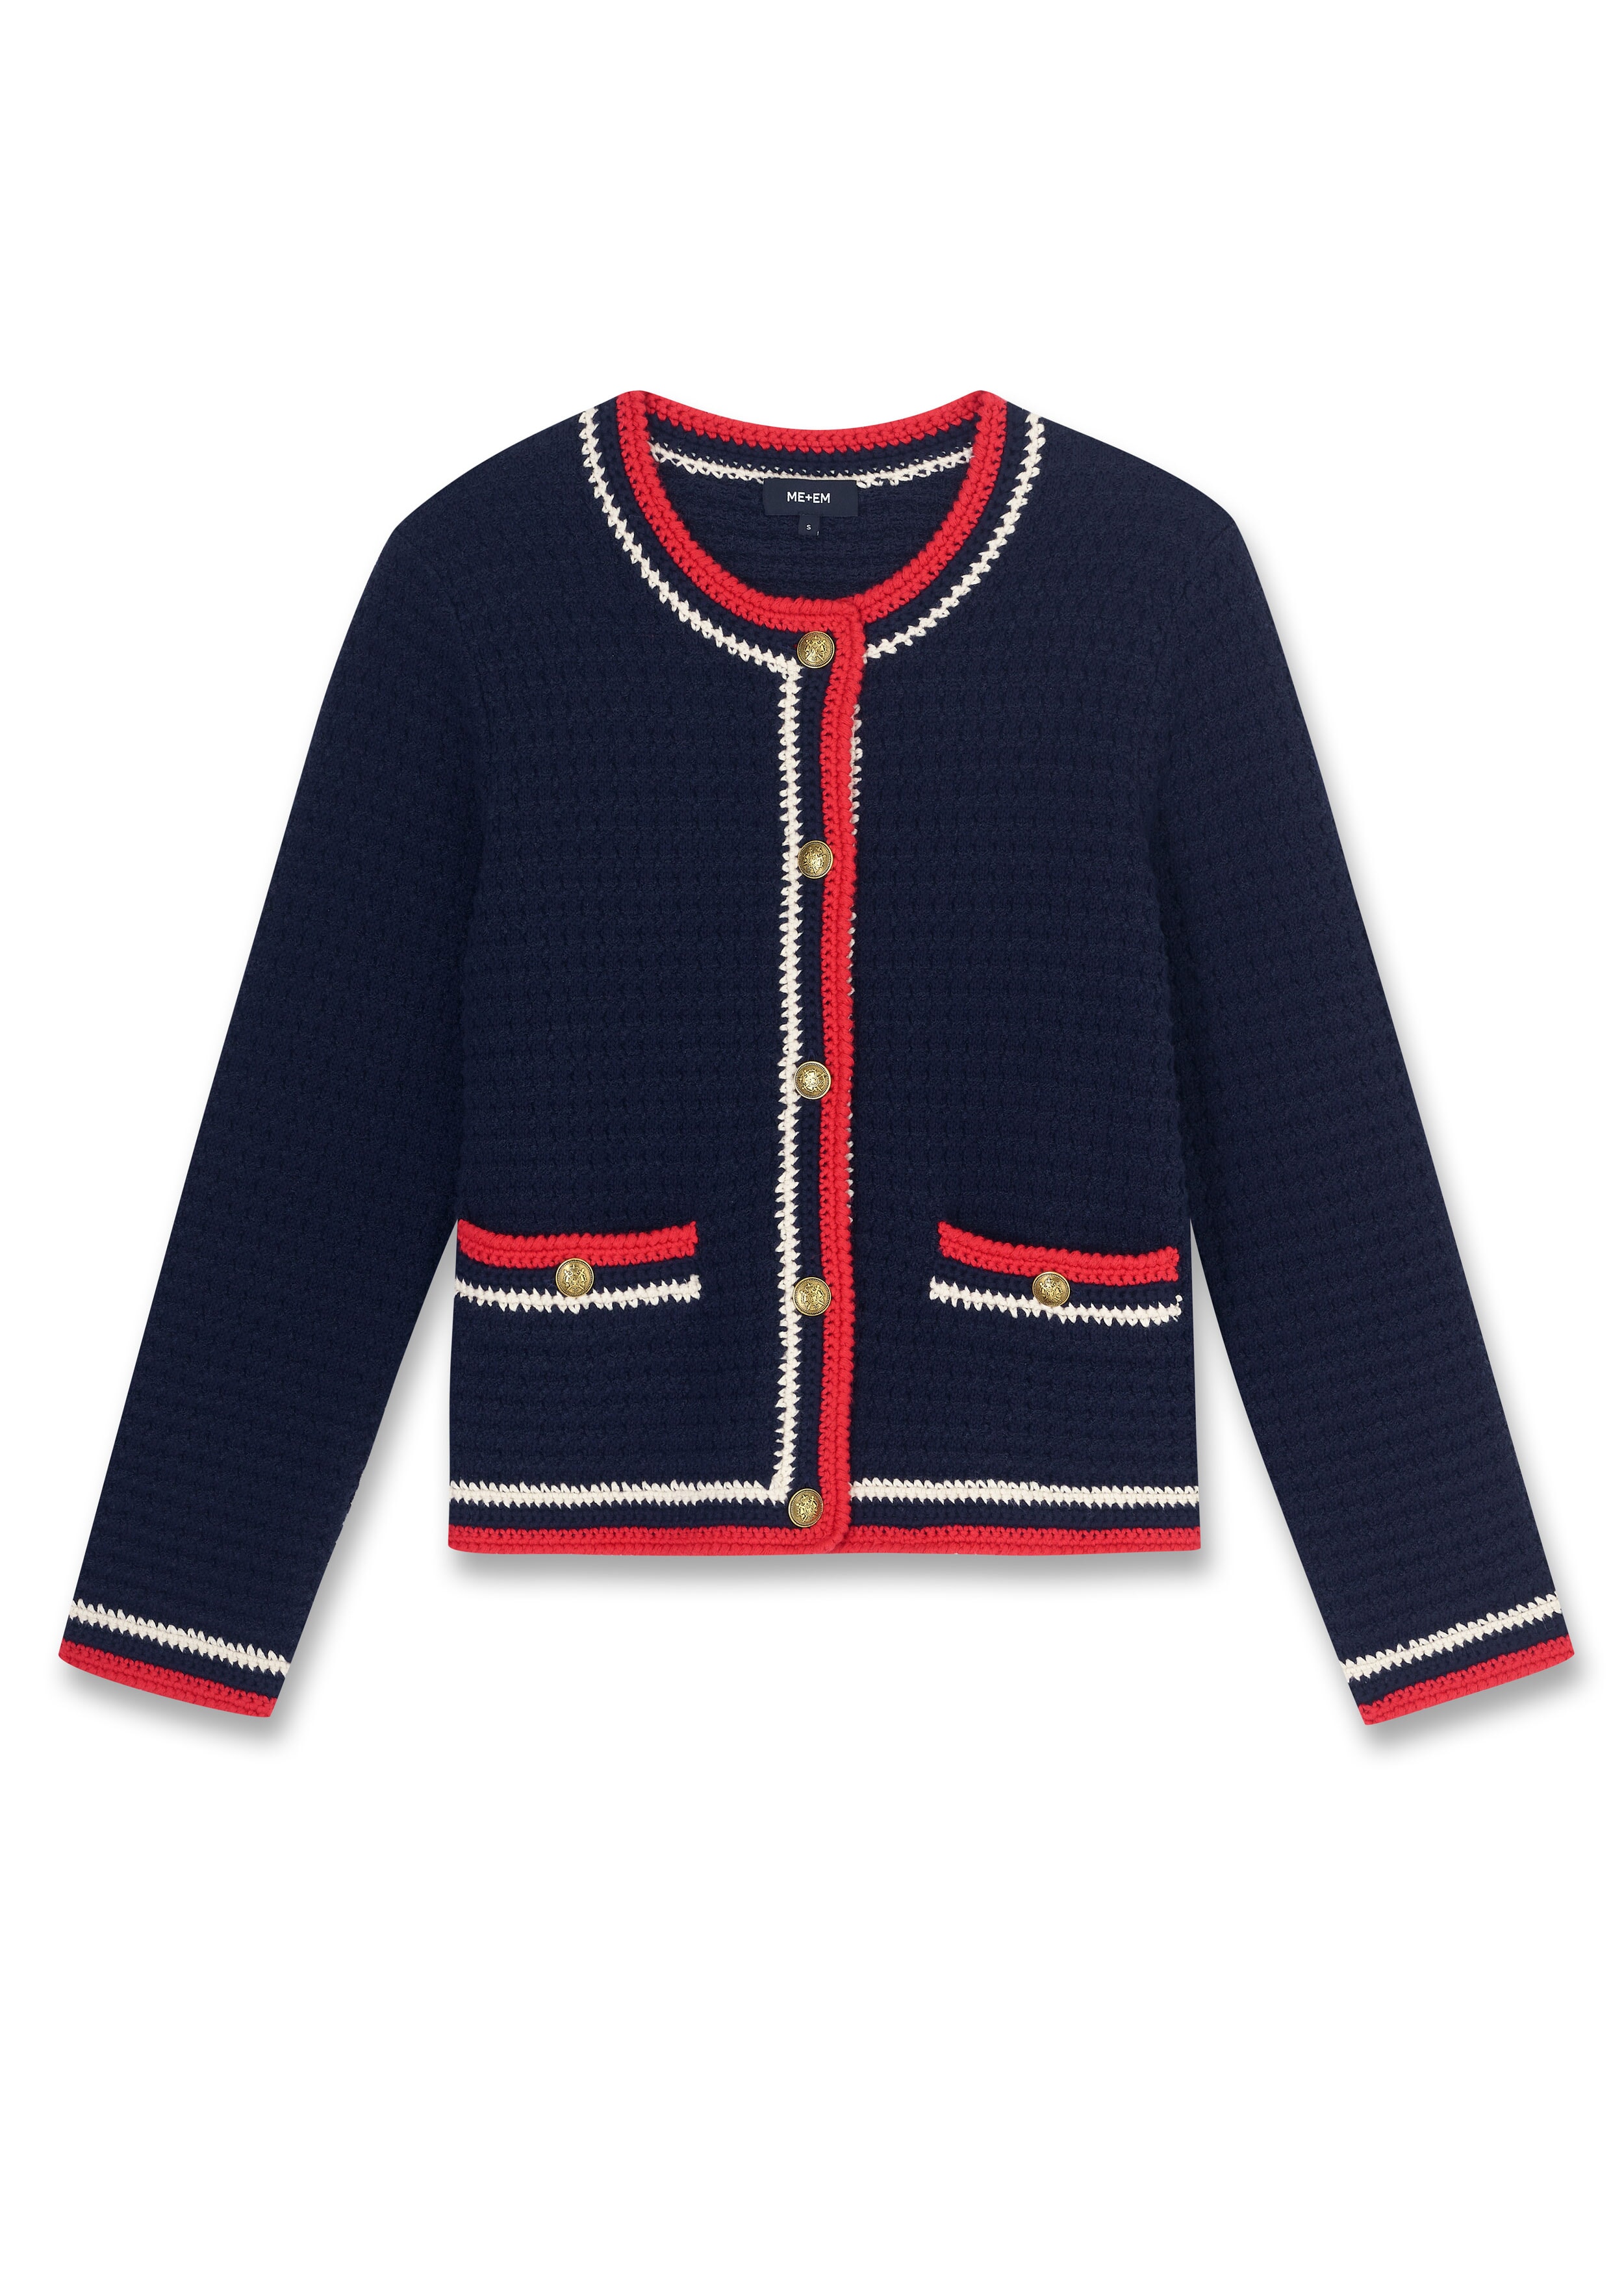 Hand-Crocheted Trim Bouclé Jacket Navy/Red/Cream